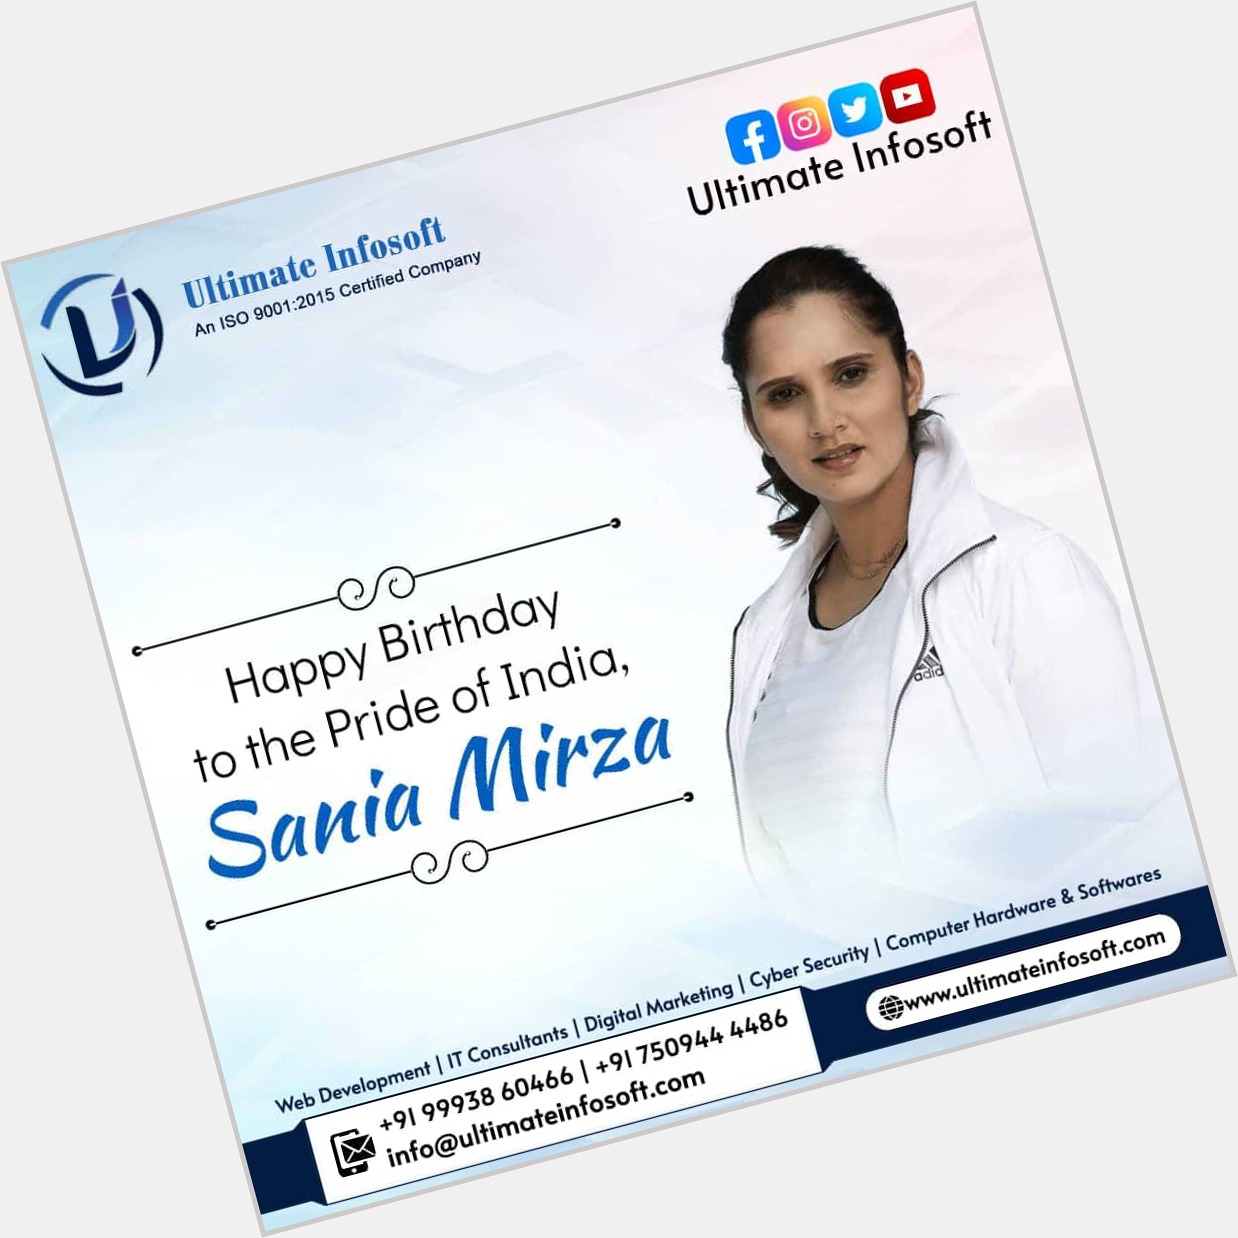 Happy Birthday to the Pride of India, Sania Mirza
 